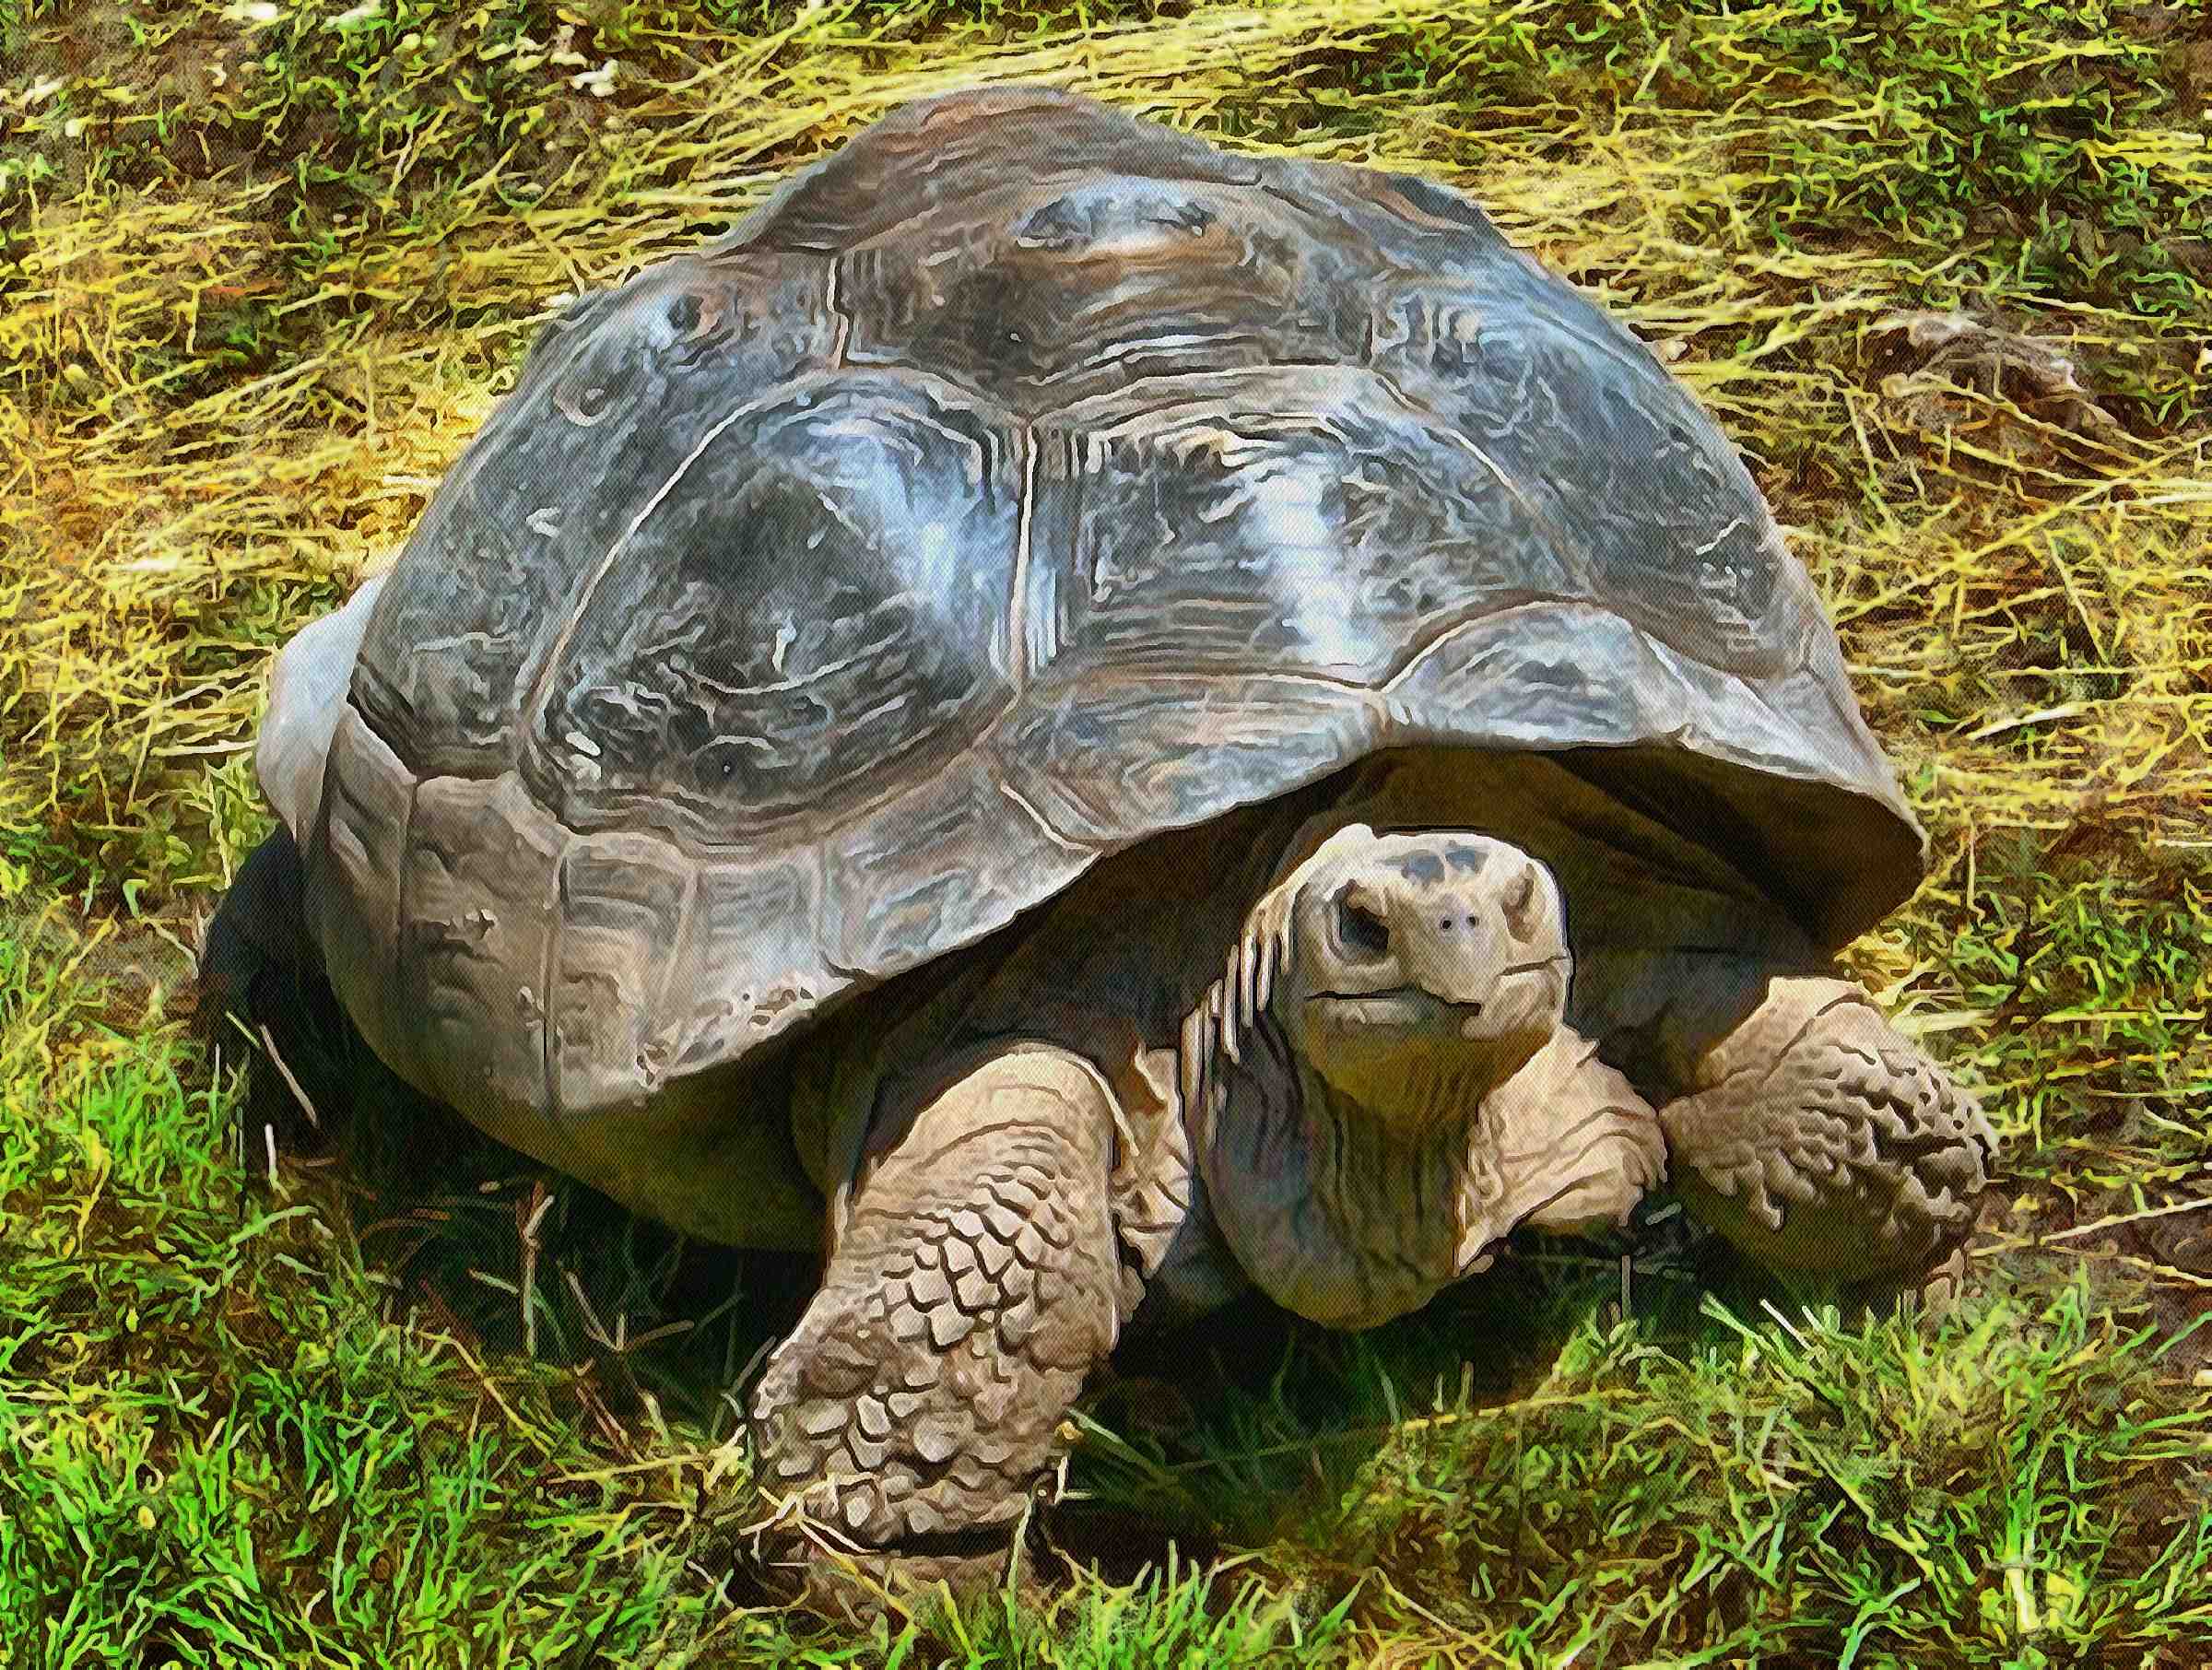 Turtle, tortoise,  loggerhead, terrapin, chelonian, leatherback, – Turtle free images, Tortoise free images, Turtle stock free images, Download free images turtles, turtle public domain images, tortoise public domain images!